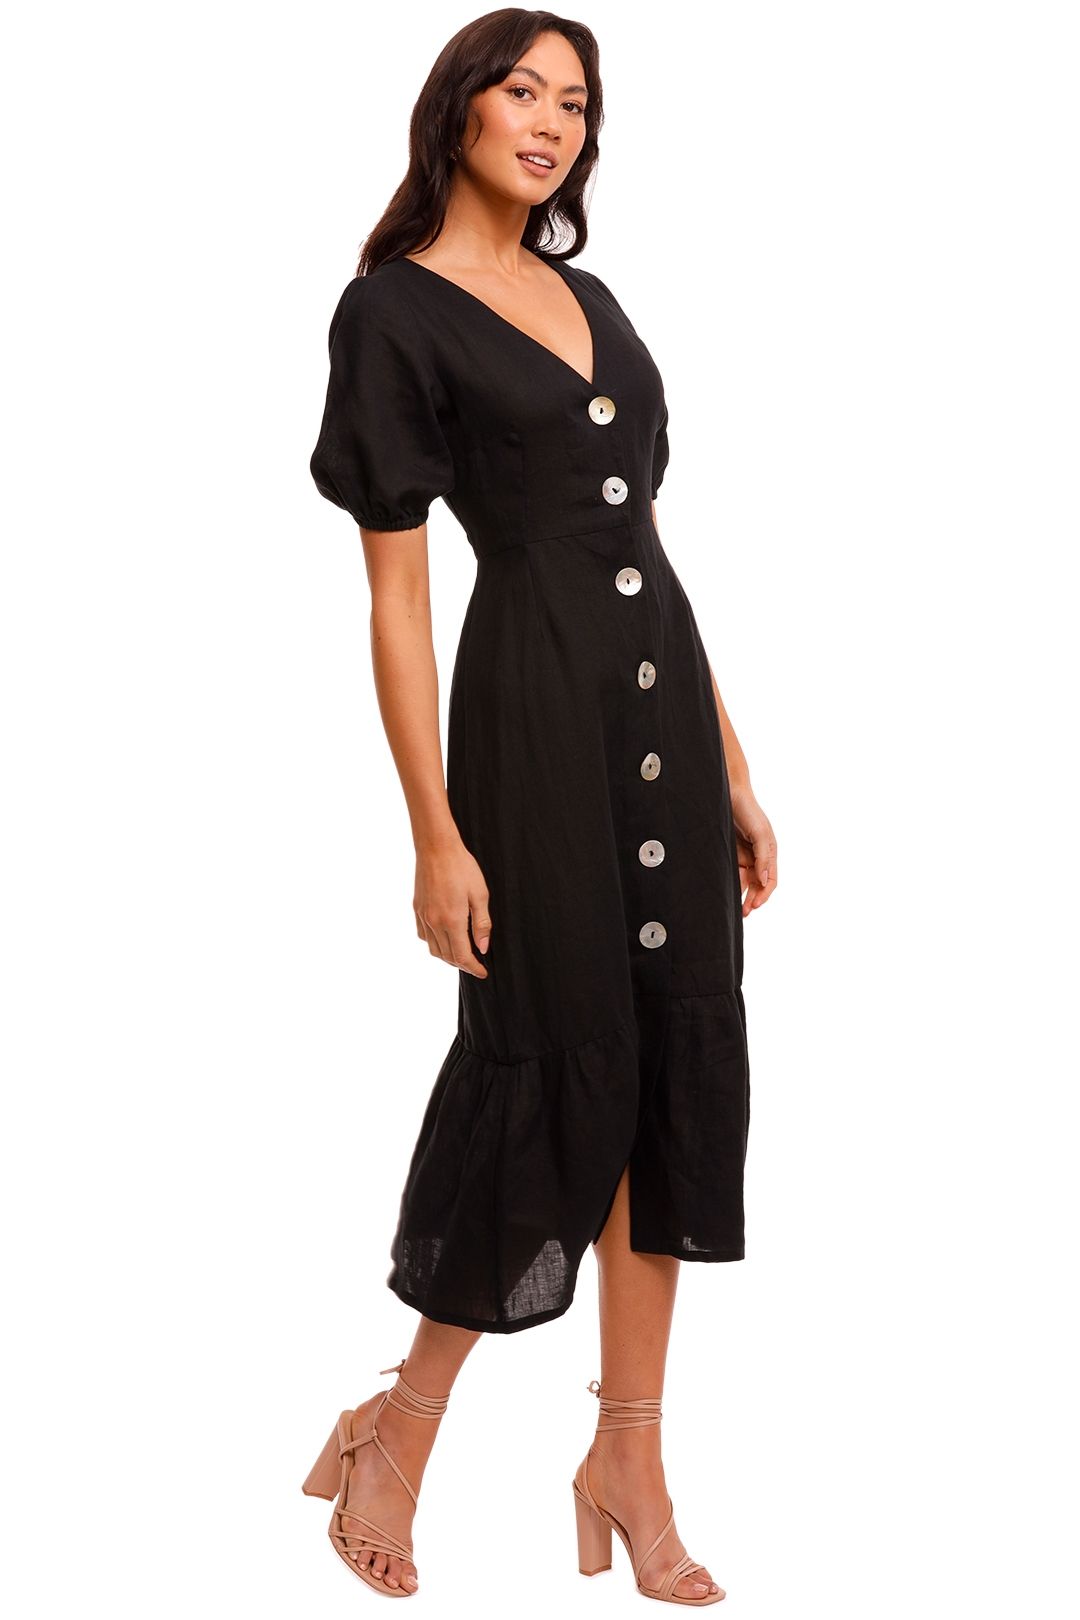 Jillian Boustred Liberty Dress Black Short Sleeve